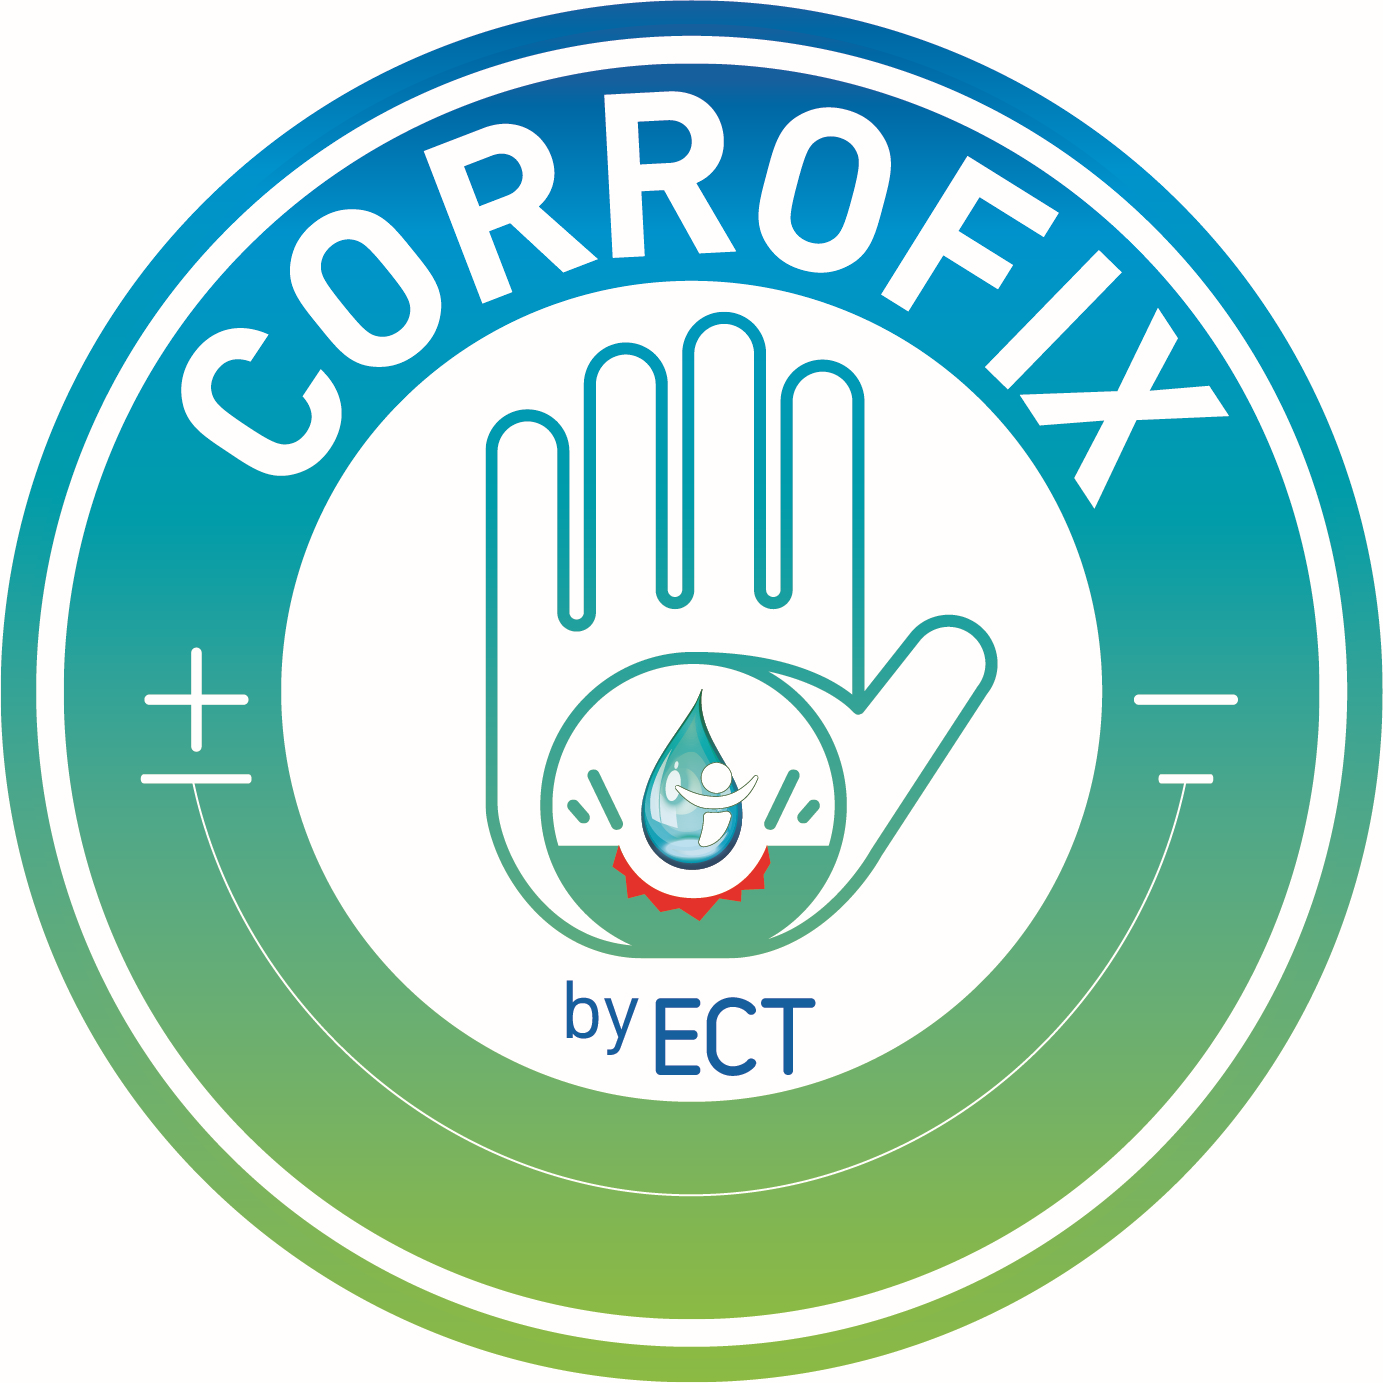 ECT / Corrofix